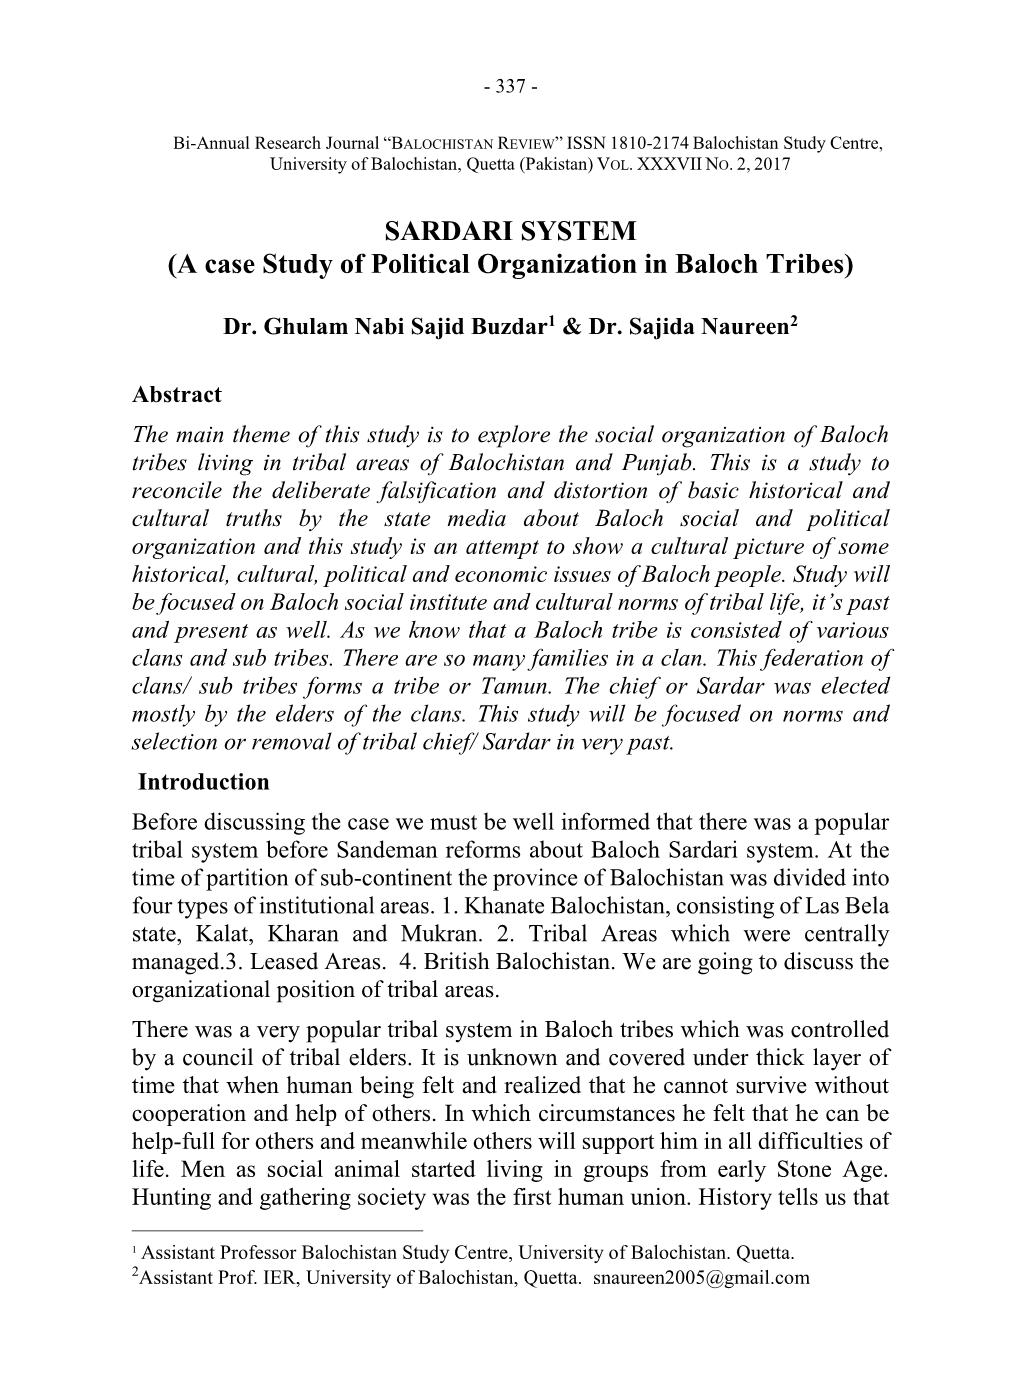 SARDARI SYSTEM (A Case Study of Political Organization in Baloch Tribes)